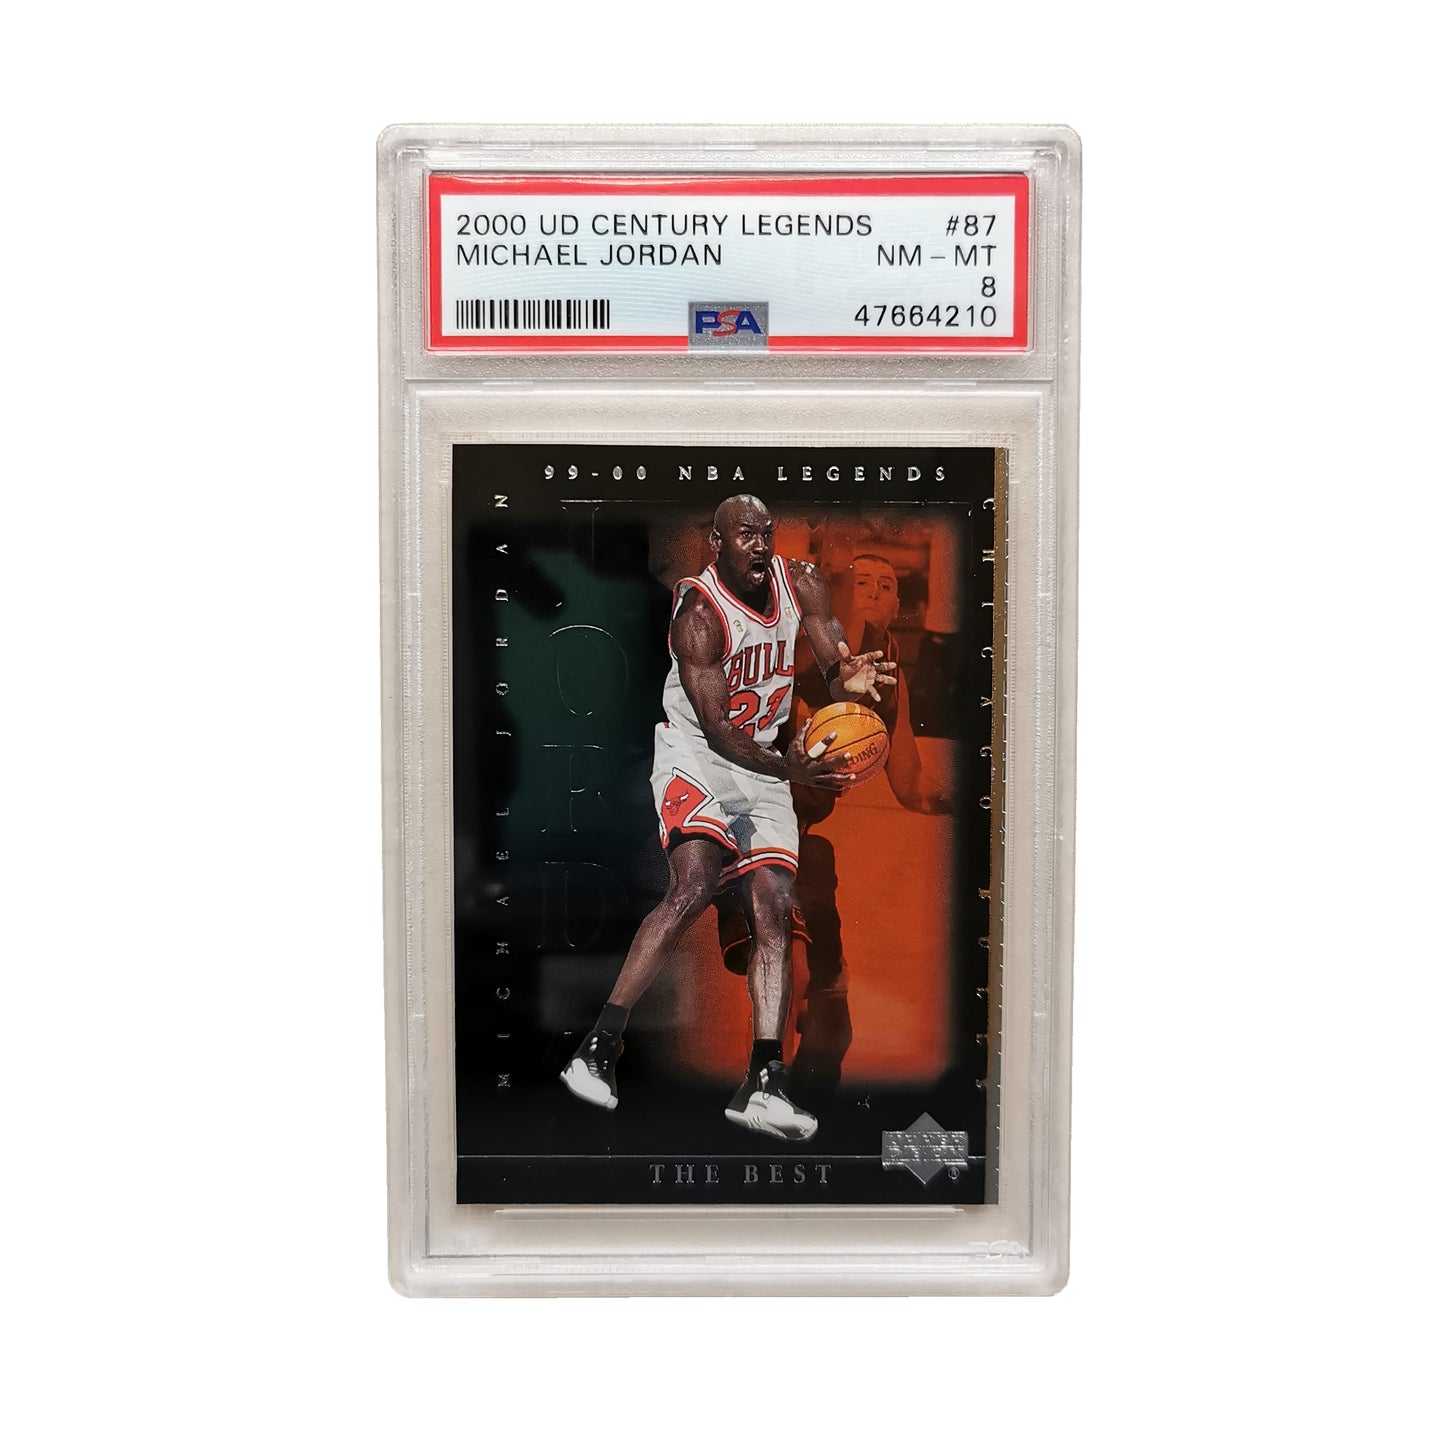 2000 Upper Deck UD Century Legends Michael Jordan #87 Mint PSA 8